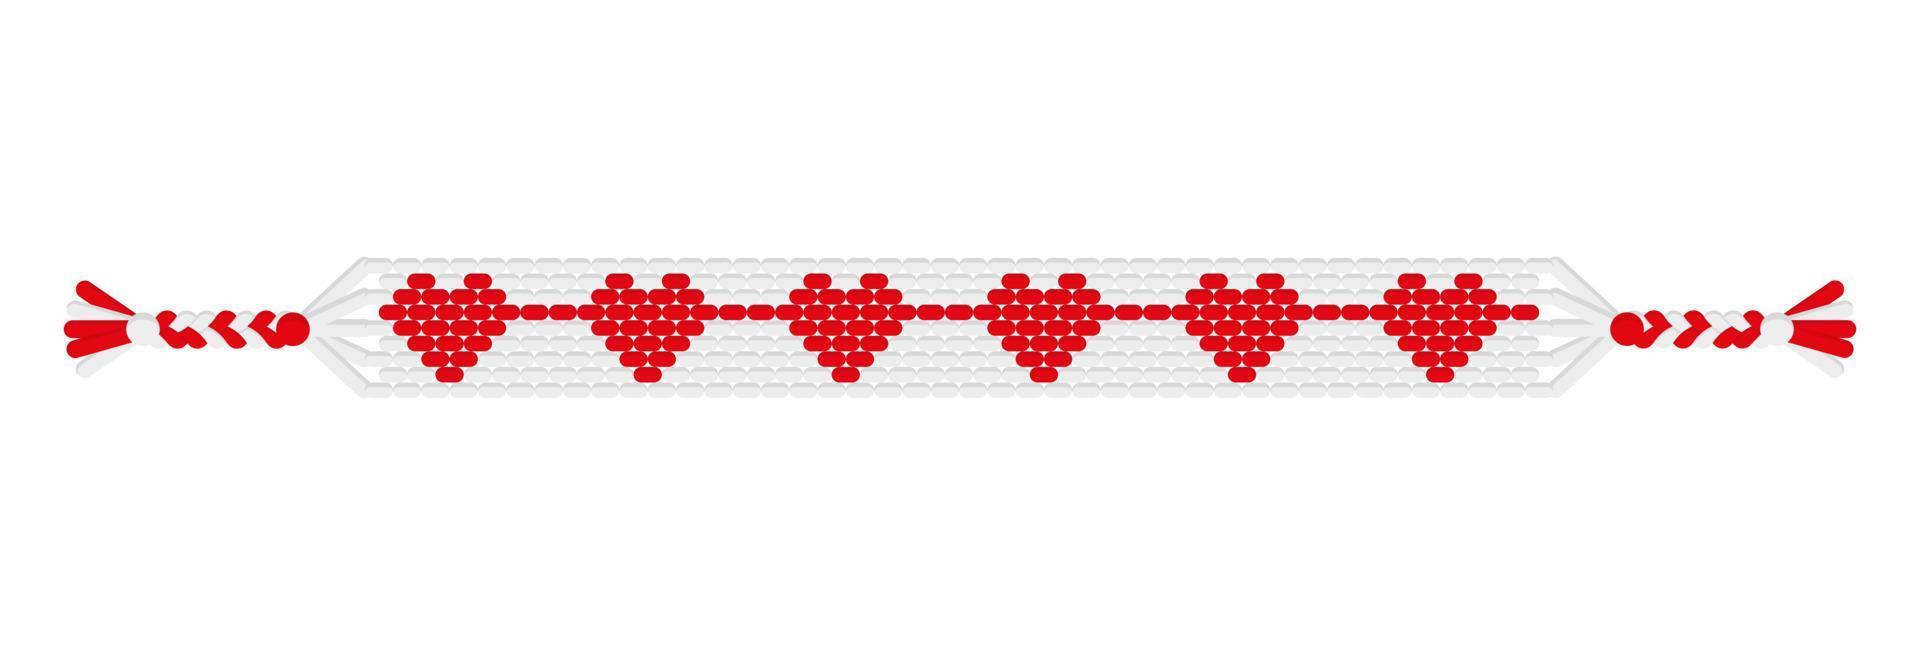 Vector love handmade hippie friendship bracelet of red and white threads.